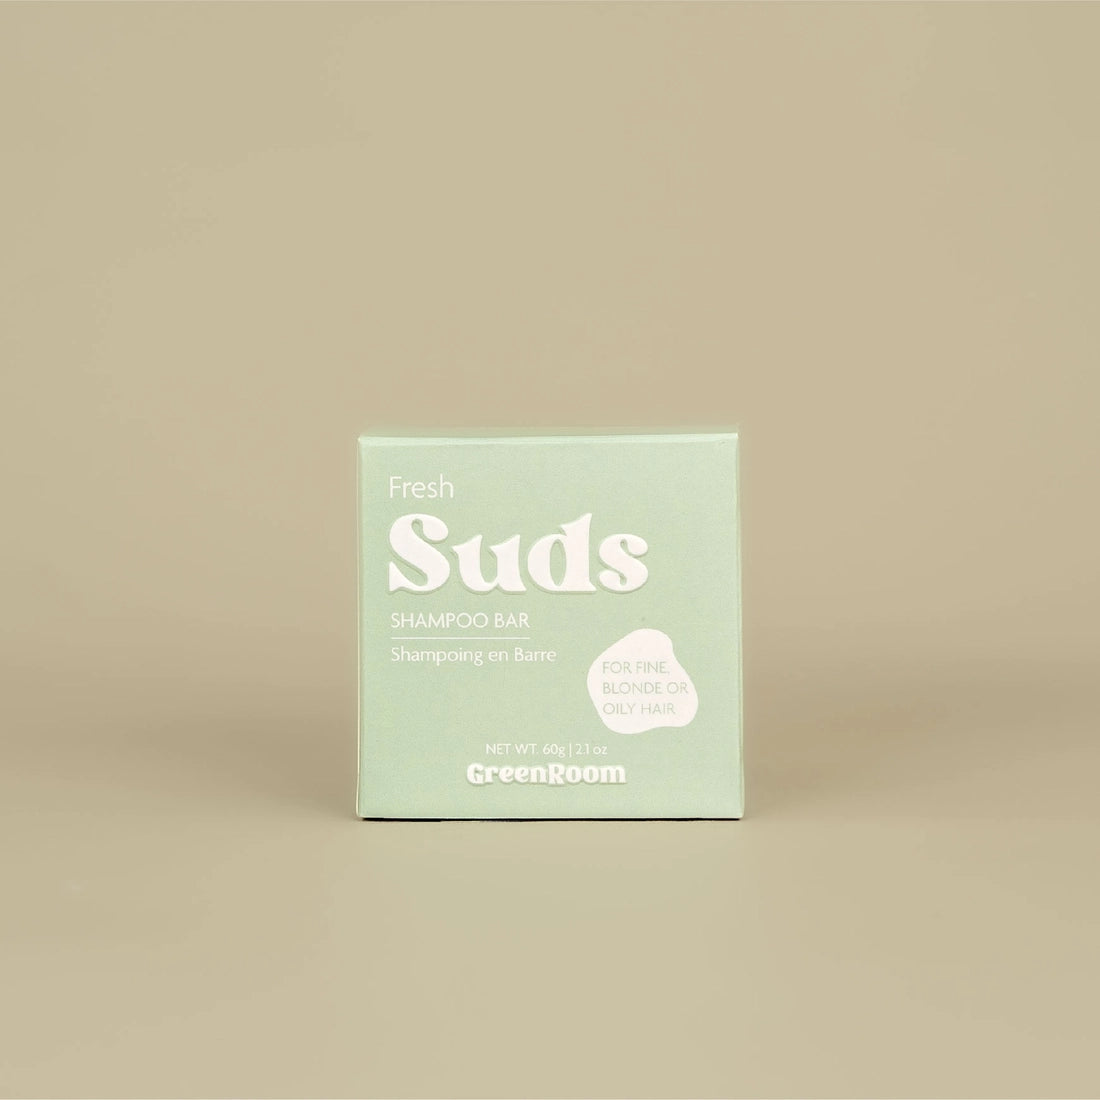 Suds Shampoo Bar - FRESH